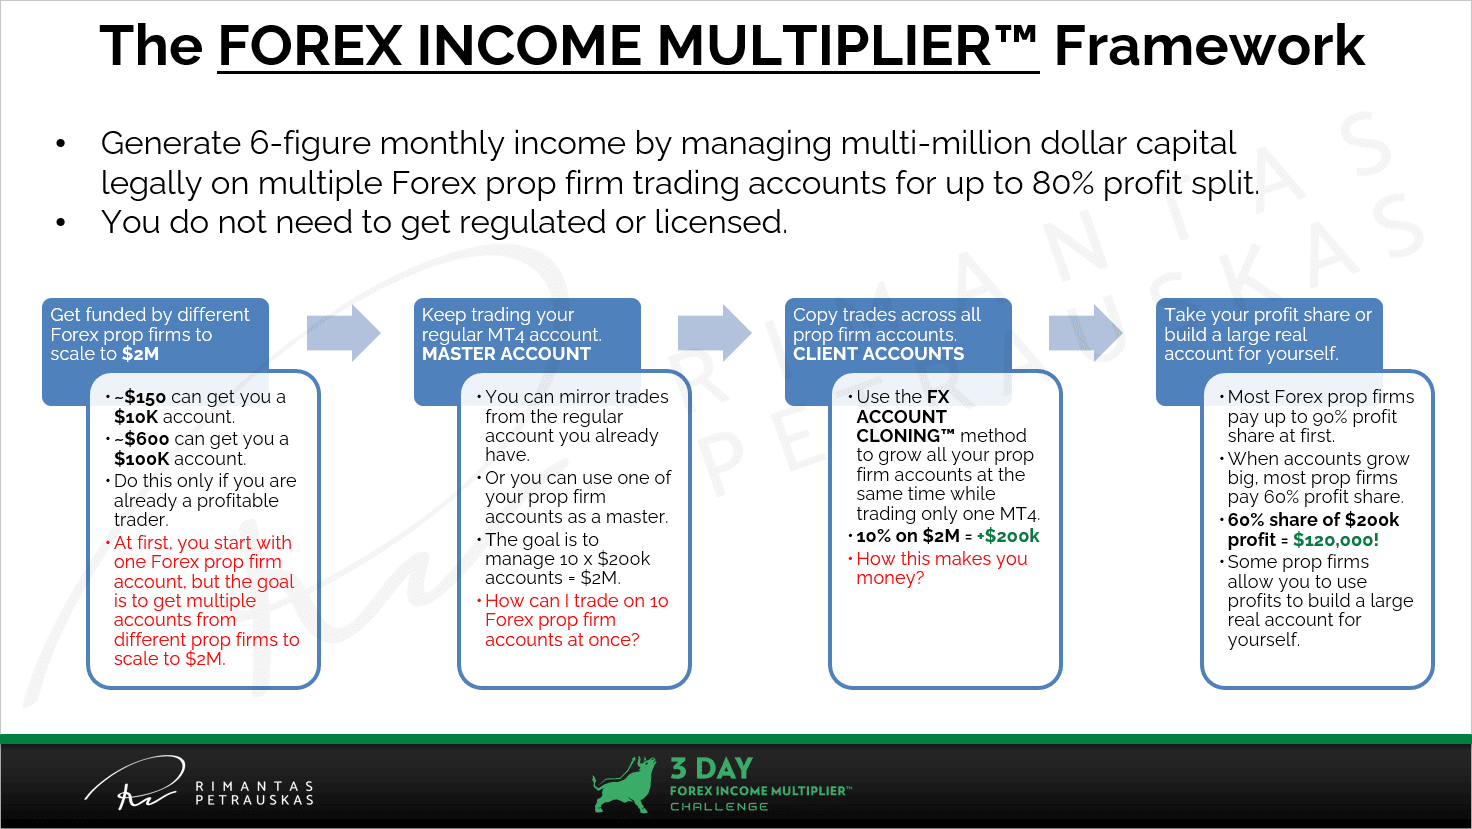 The Forex Income Multiplier™ framework